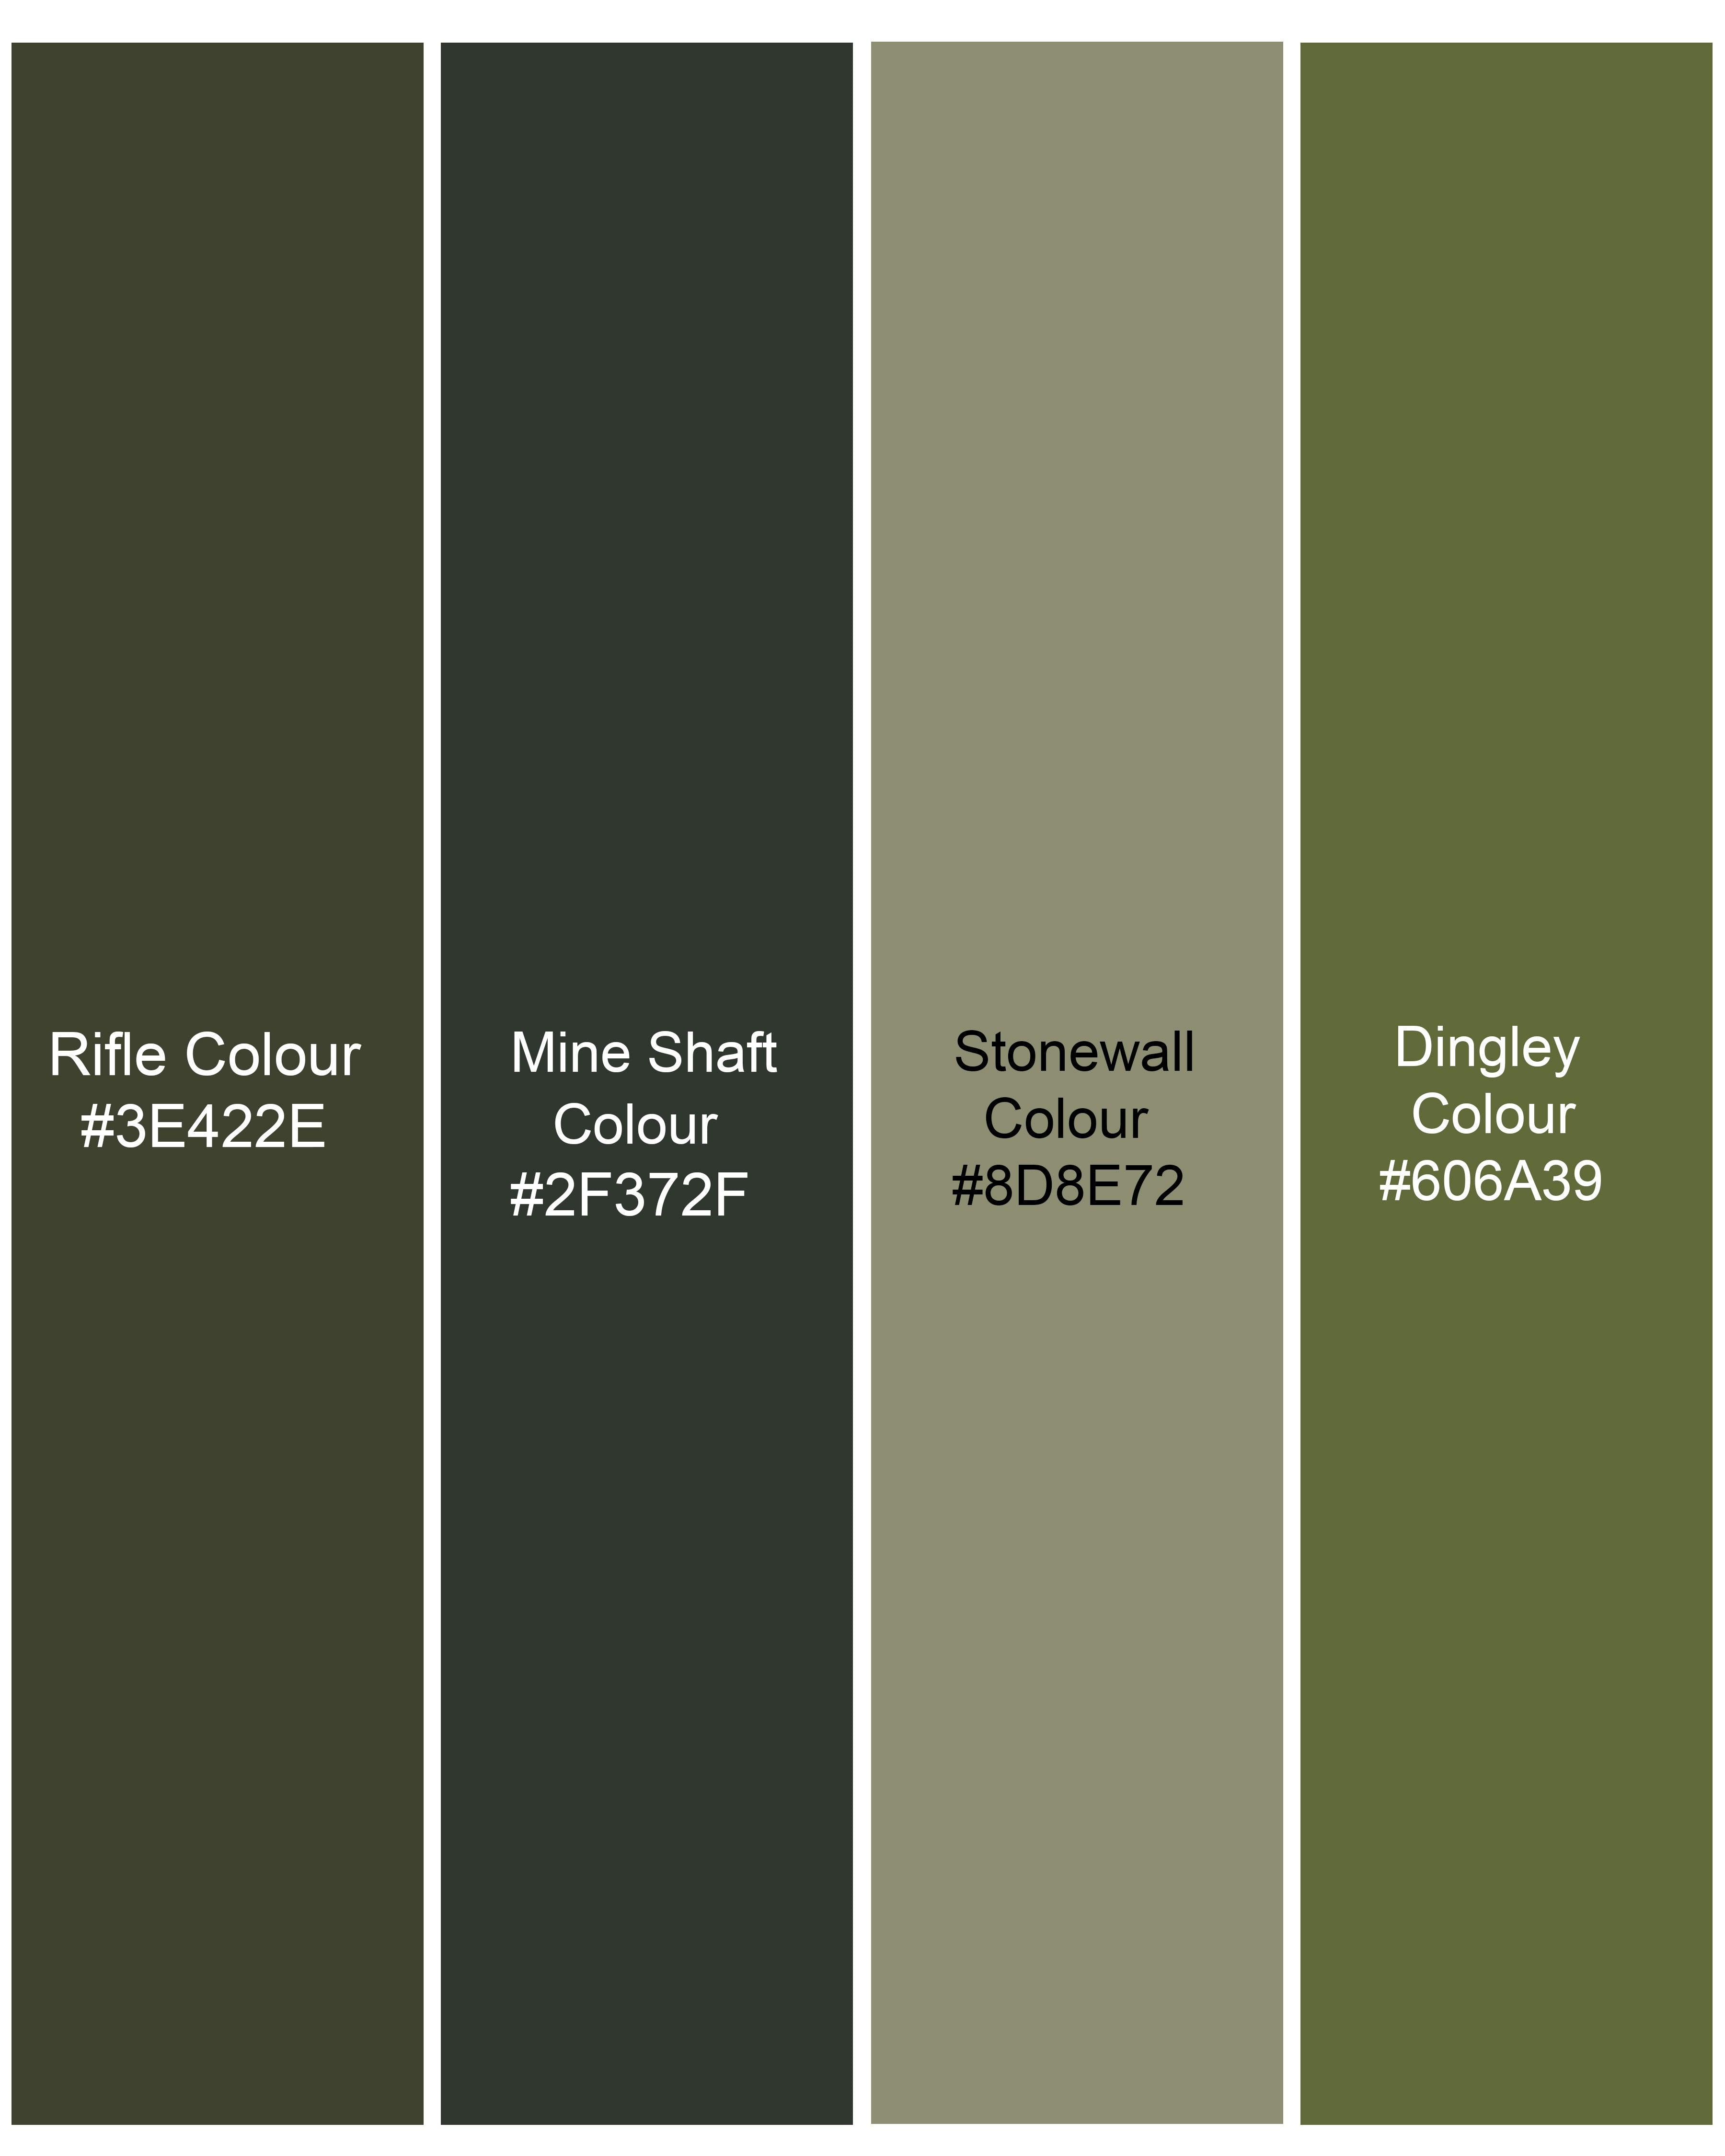 Rifle Green with Stonewall Brown Camouflage Printed Royal Oxford Designer Shirt 8925-P325-38, 8925-P325-H-38,  8925-P325-39,  8925-P325-H-39,  8925-P325-40,  8925-P325-H-40,  8925-P325-42,  8925-P325-H-42,  8925-P325-44,  8925-P325-H-44,  8925-P325-46,  8925-P325-H-46,  8925-P325-48,  8925-P325-H-48,  8925-P325-50,  8925-P325-H-50,  8925-P325-52,  8925-P325-H-52